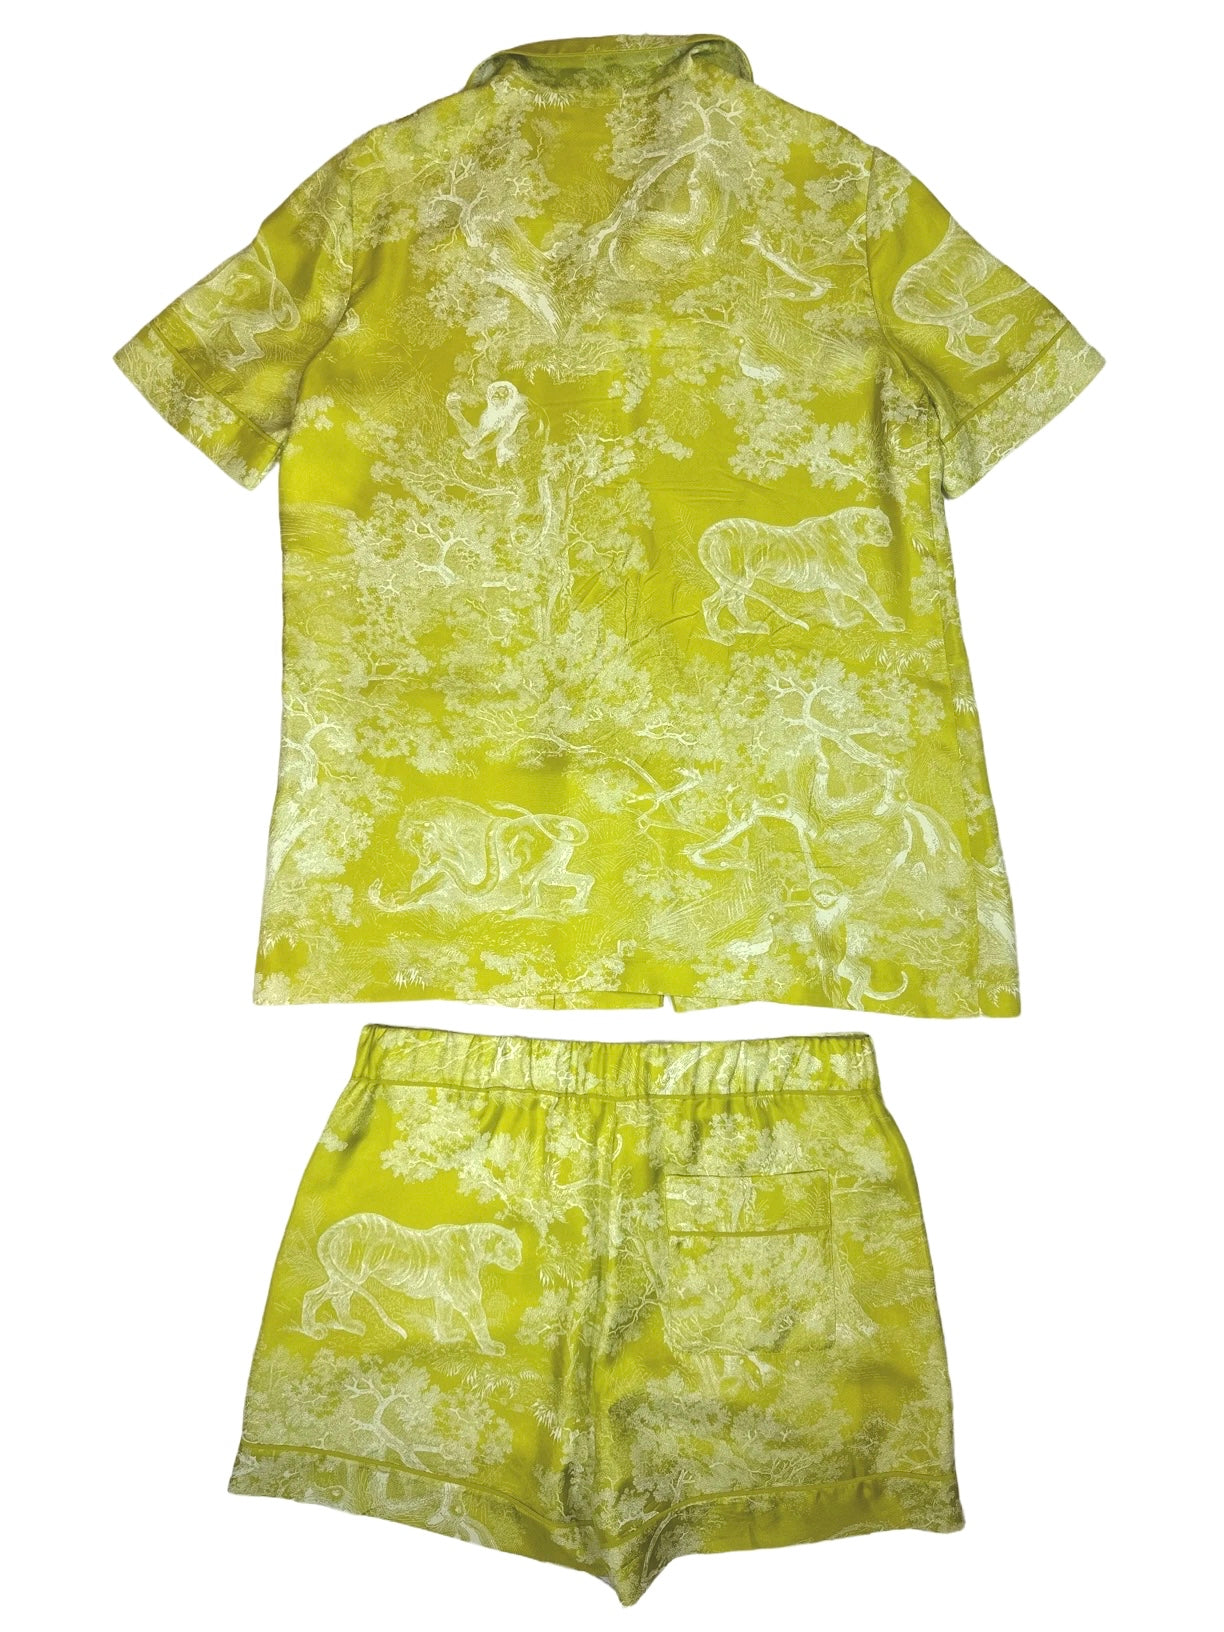 DIOR - Set pijama Toile de Jouy lime 100% silk size 36FR & 38 FR